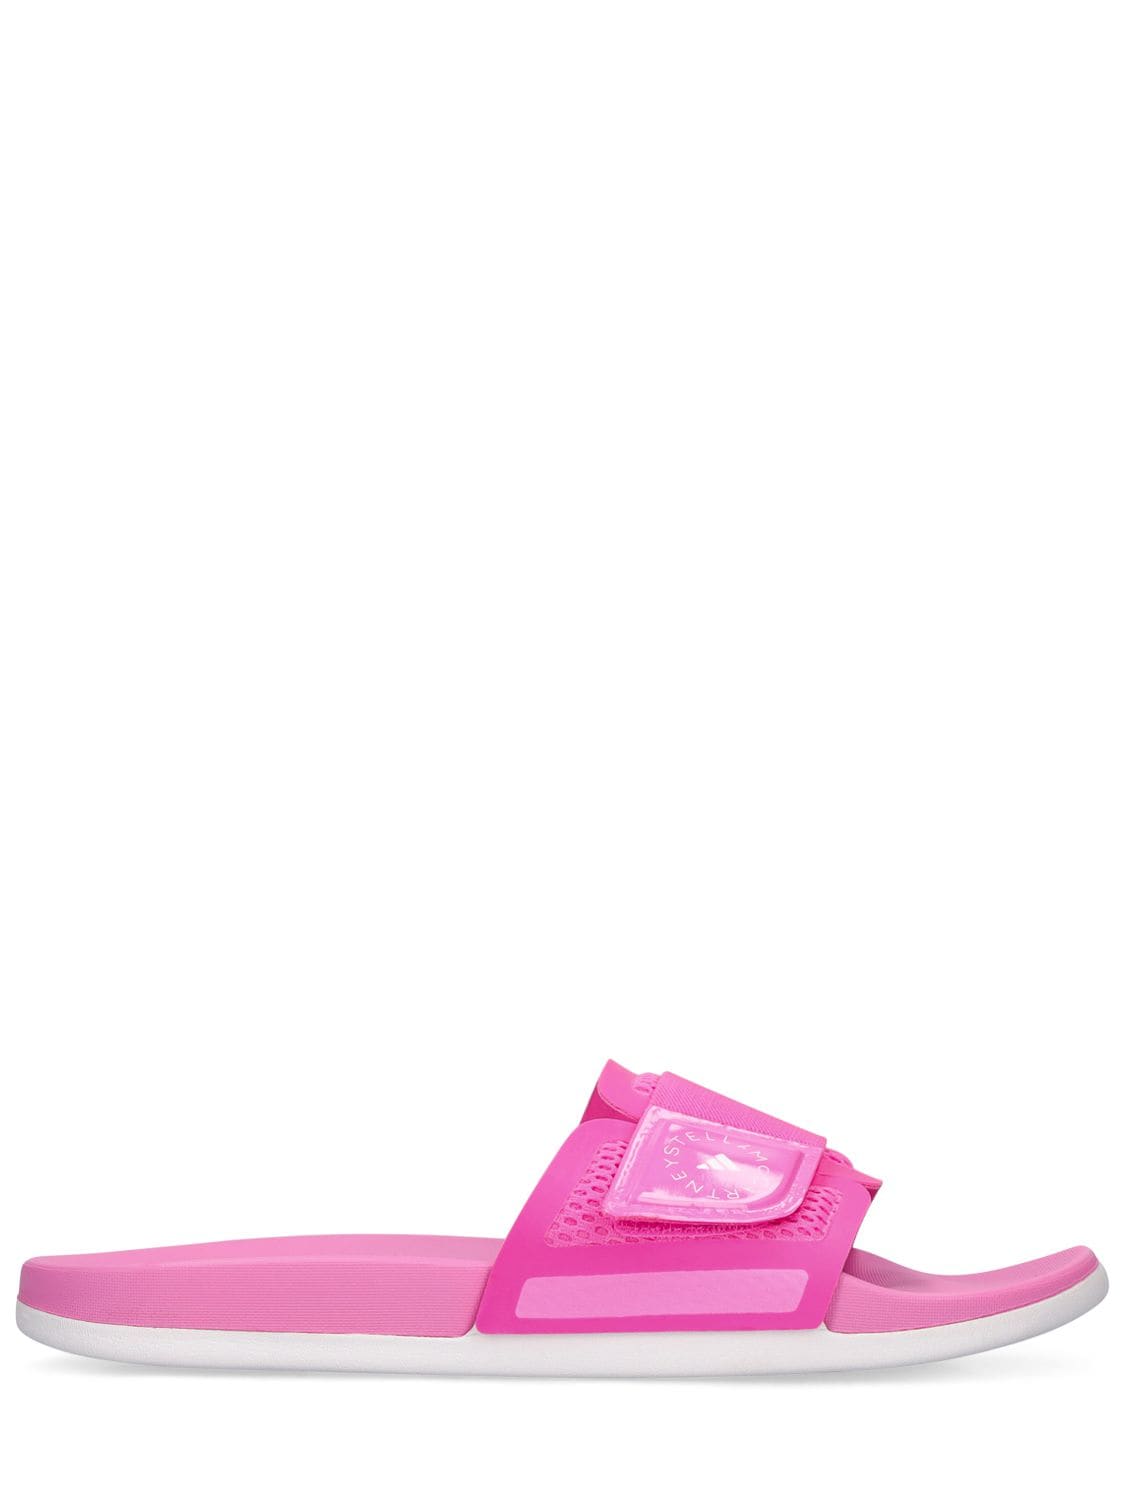 Adidas X Stella McCartney Asmc Slide Sandals